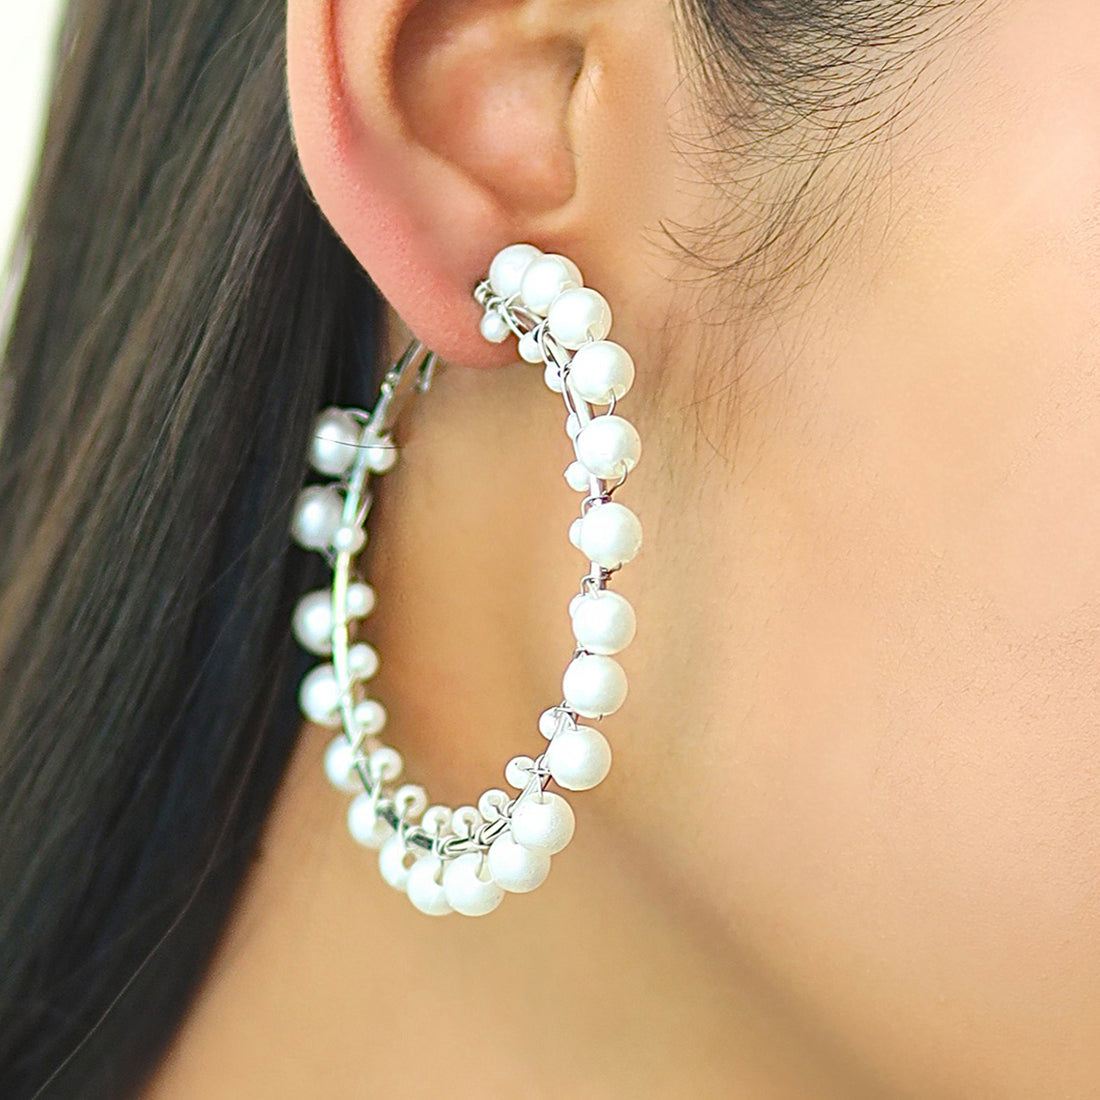 Oversized Silver-Toned Pearl Studded Hoop Earrings